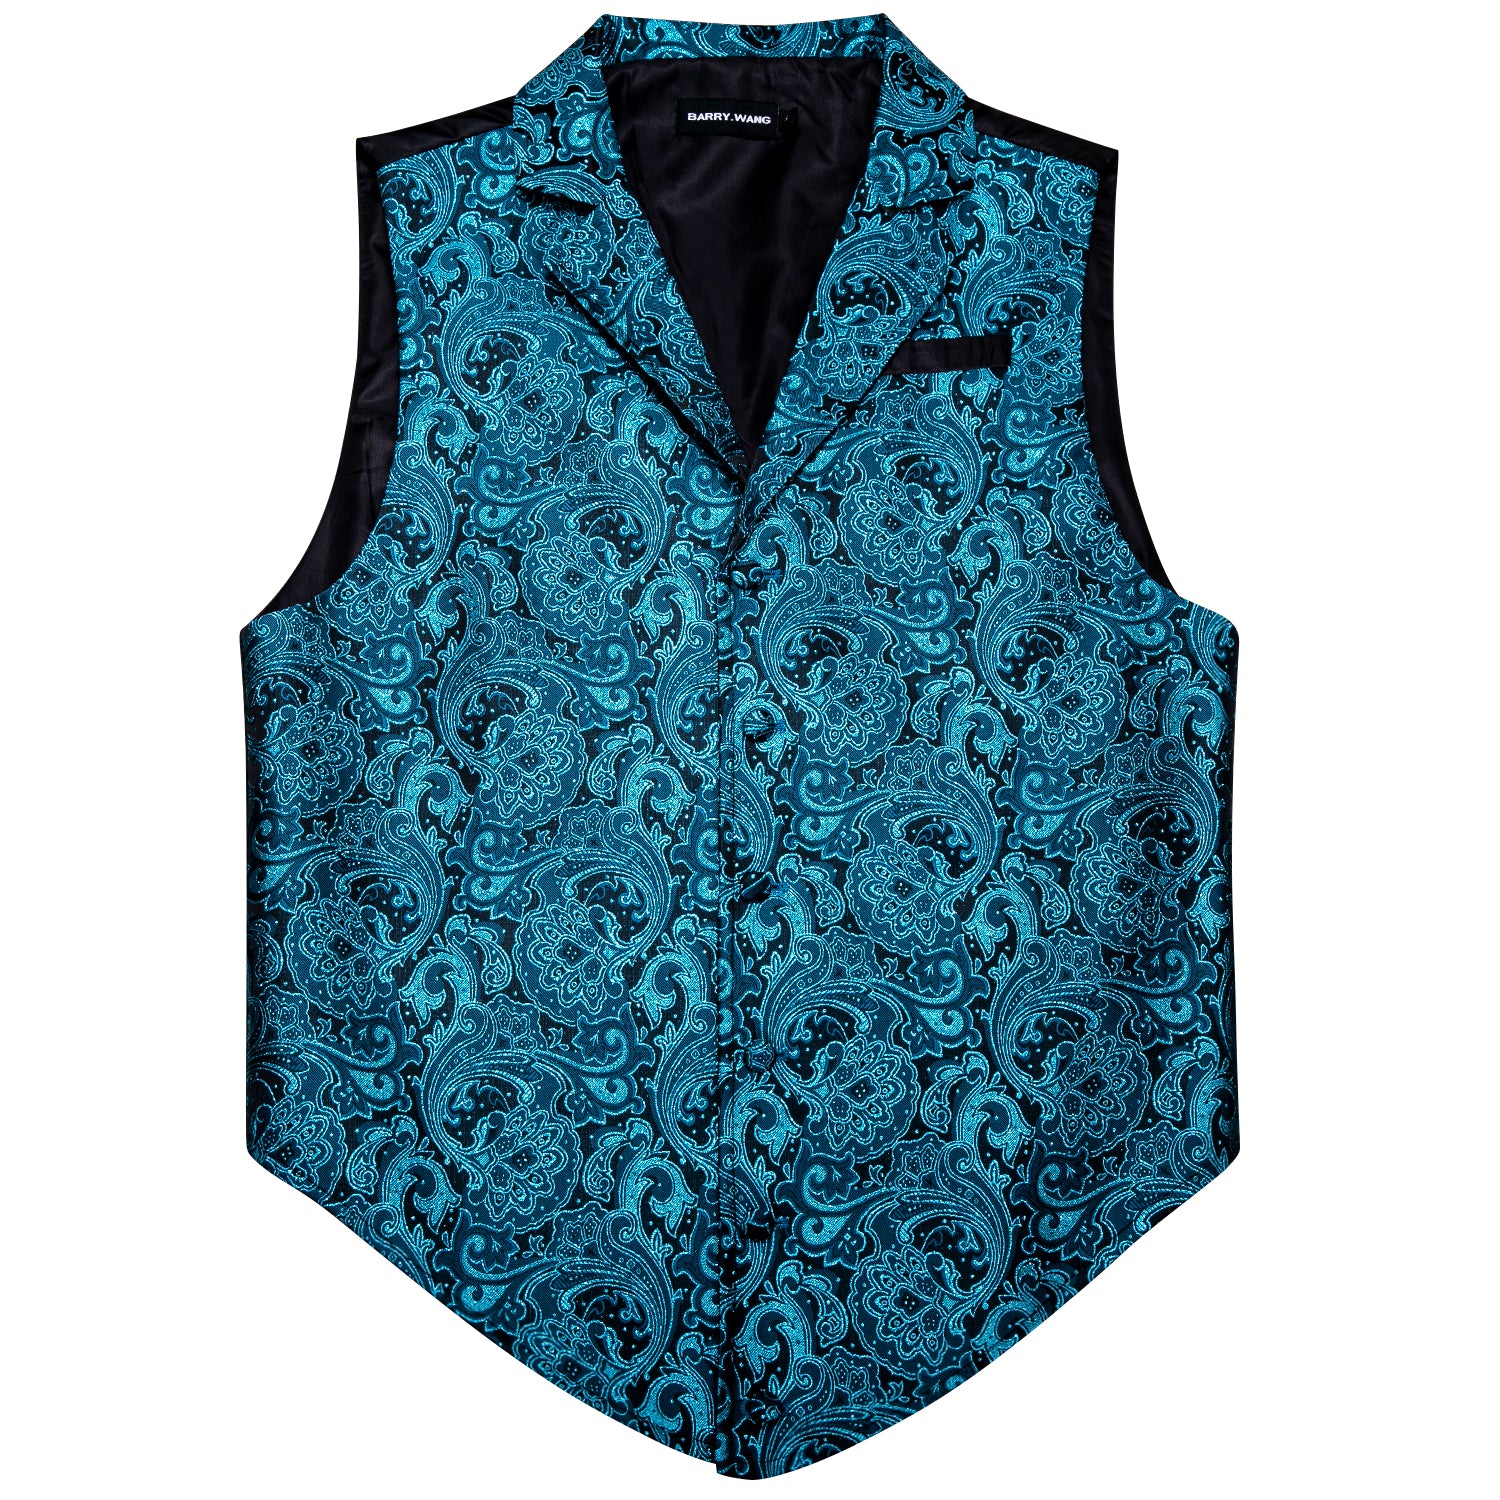 Barry.wang Vest for Mens Lake Blue Floral Silk Vest Luxury Classic